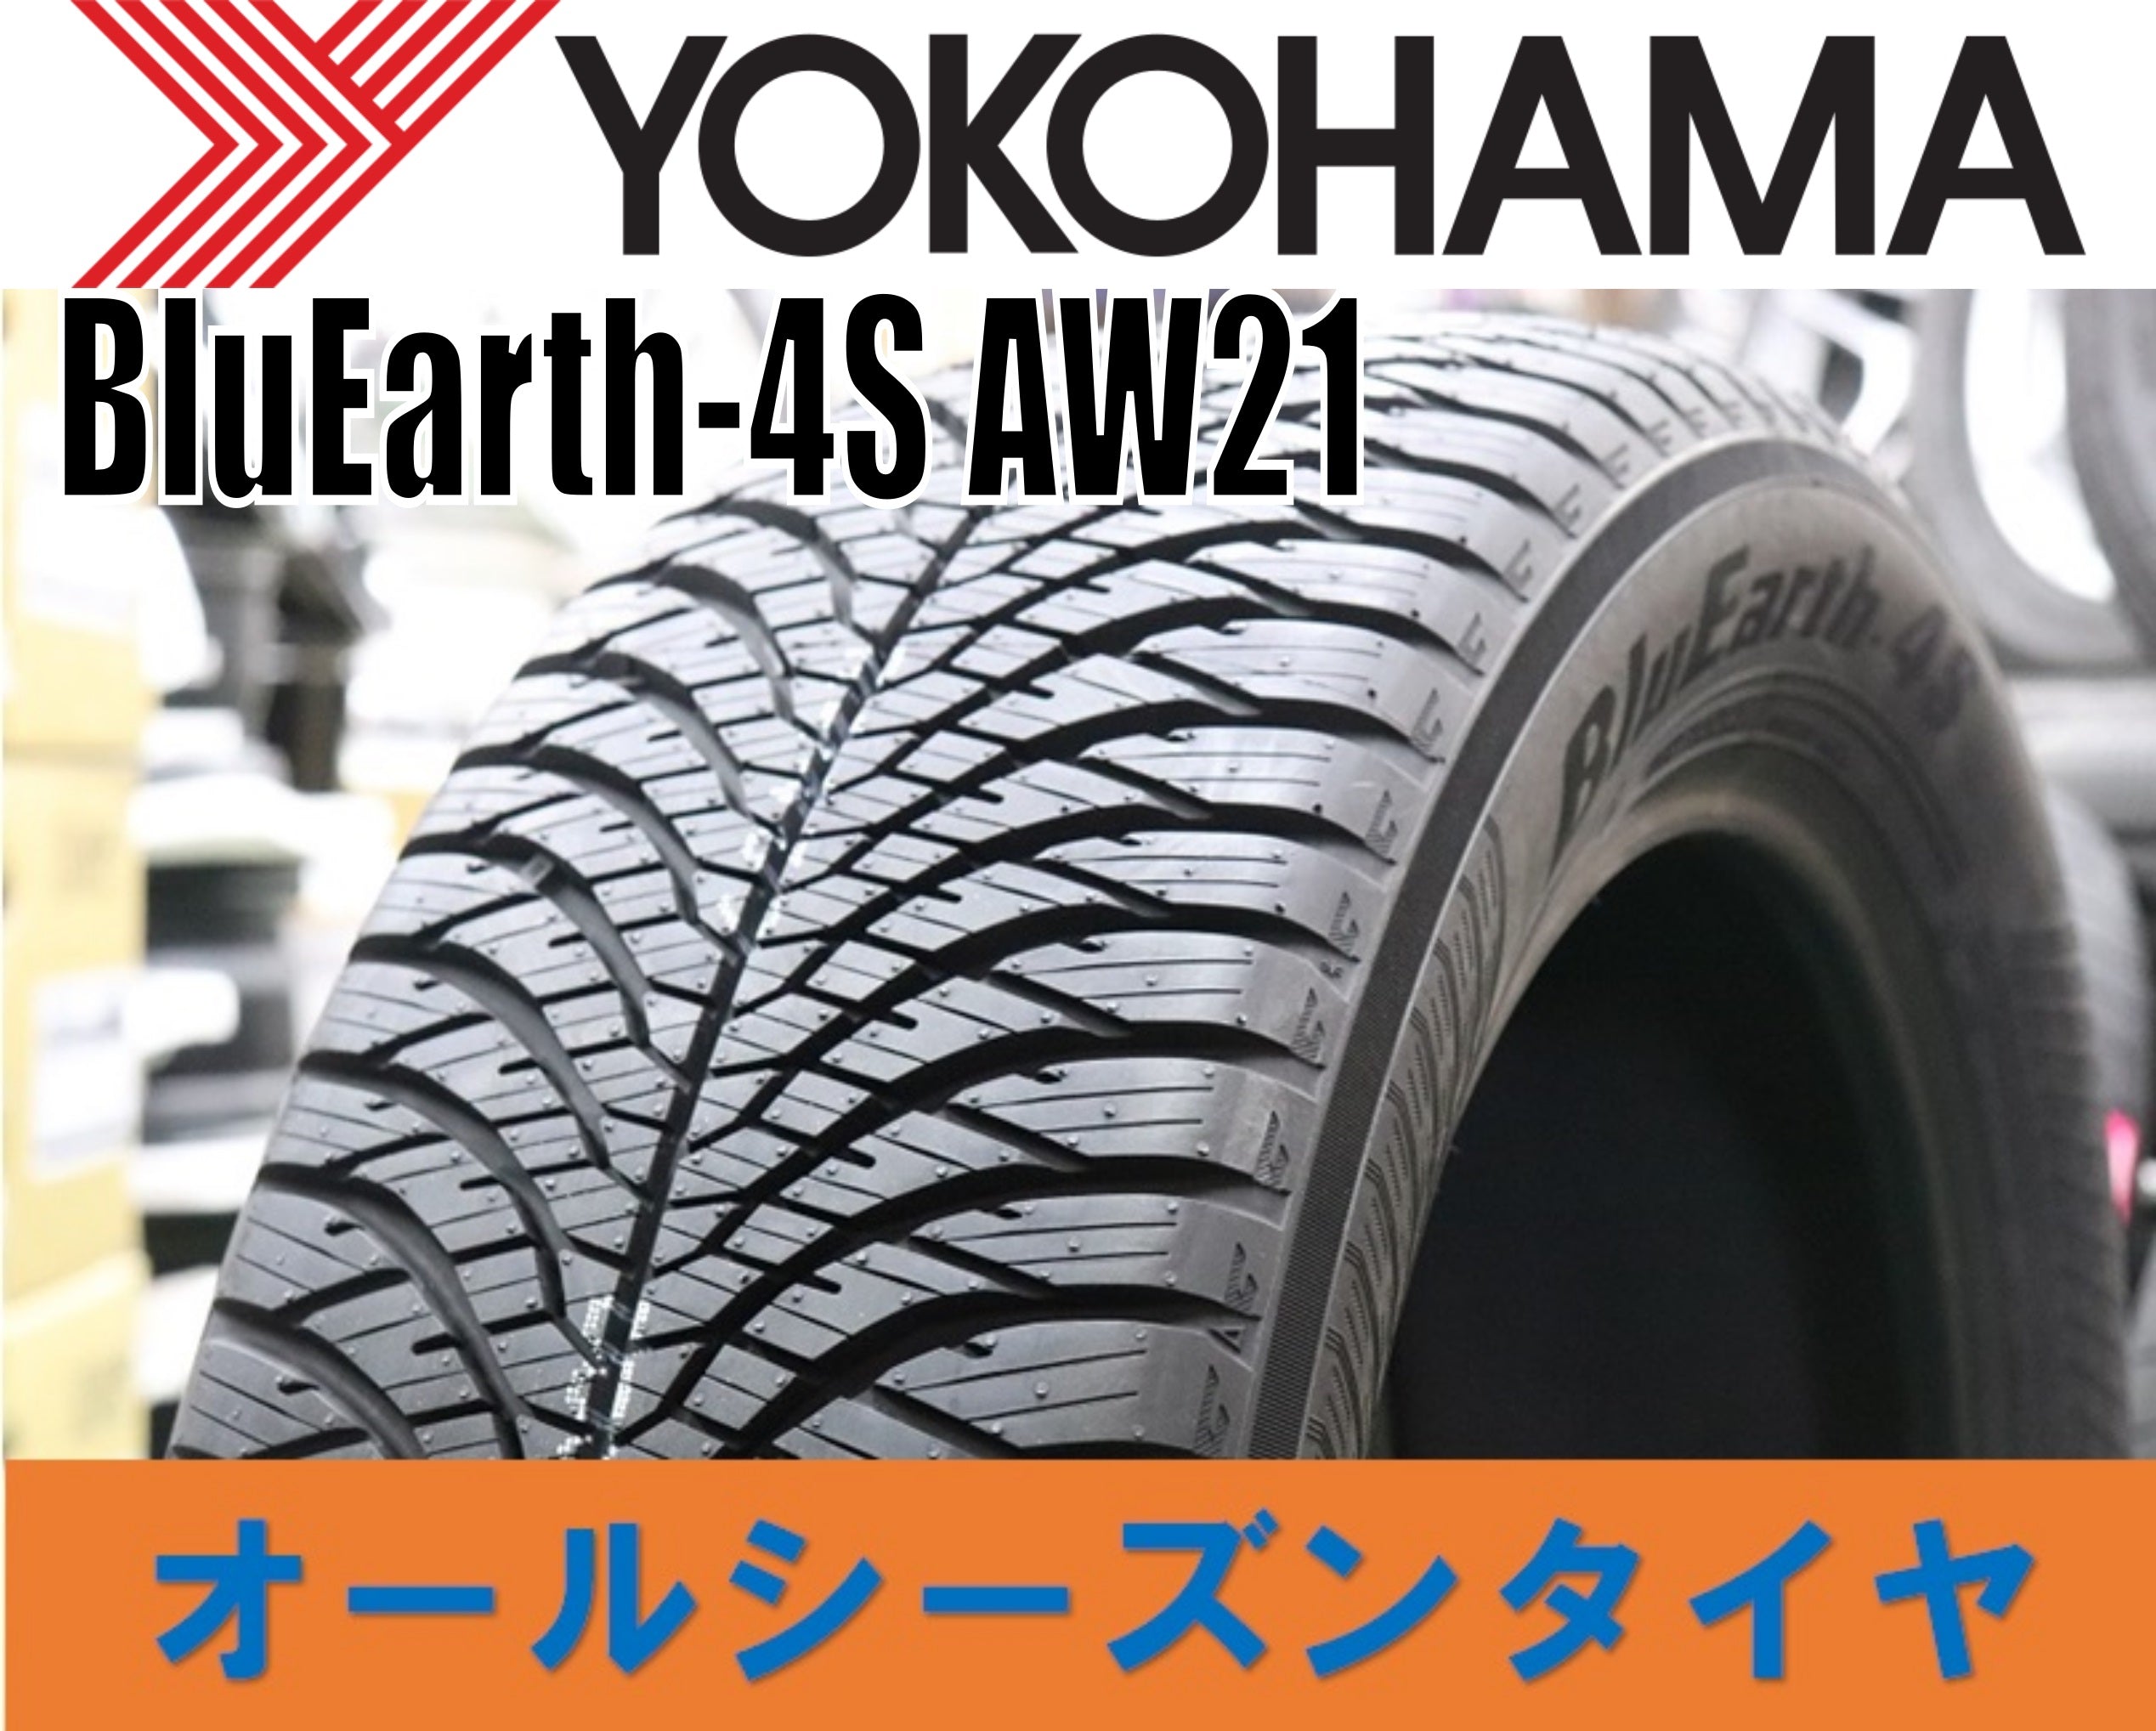 YOKOHAMA TIRE BluEarth-4S AW21 (ブルーアース フォーエス) 155/65R14 75H (155/65-14